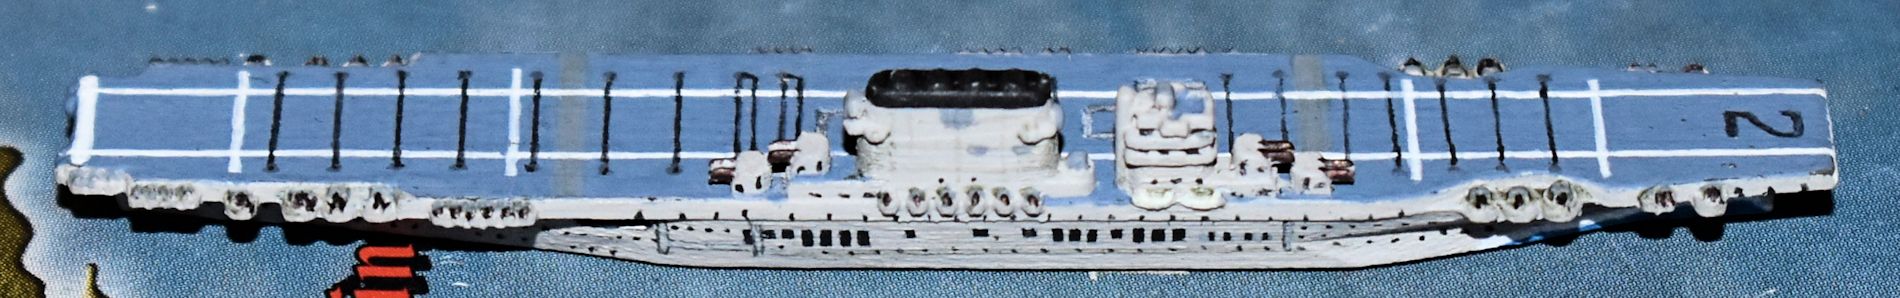 DSC_0036-USS Lexington (CV-2).jpg